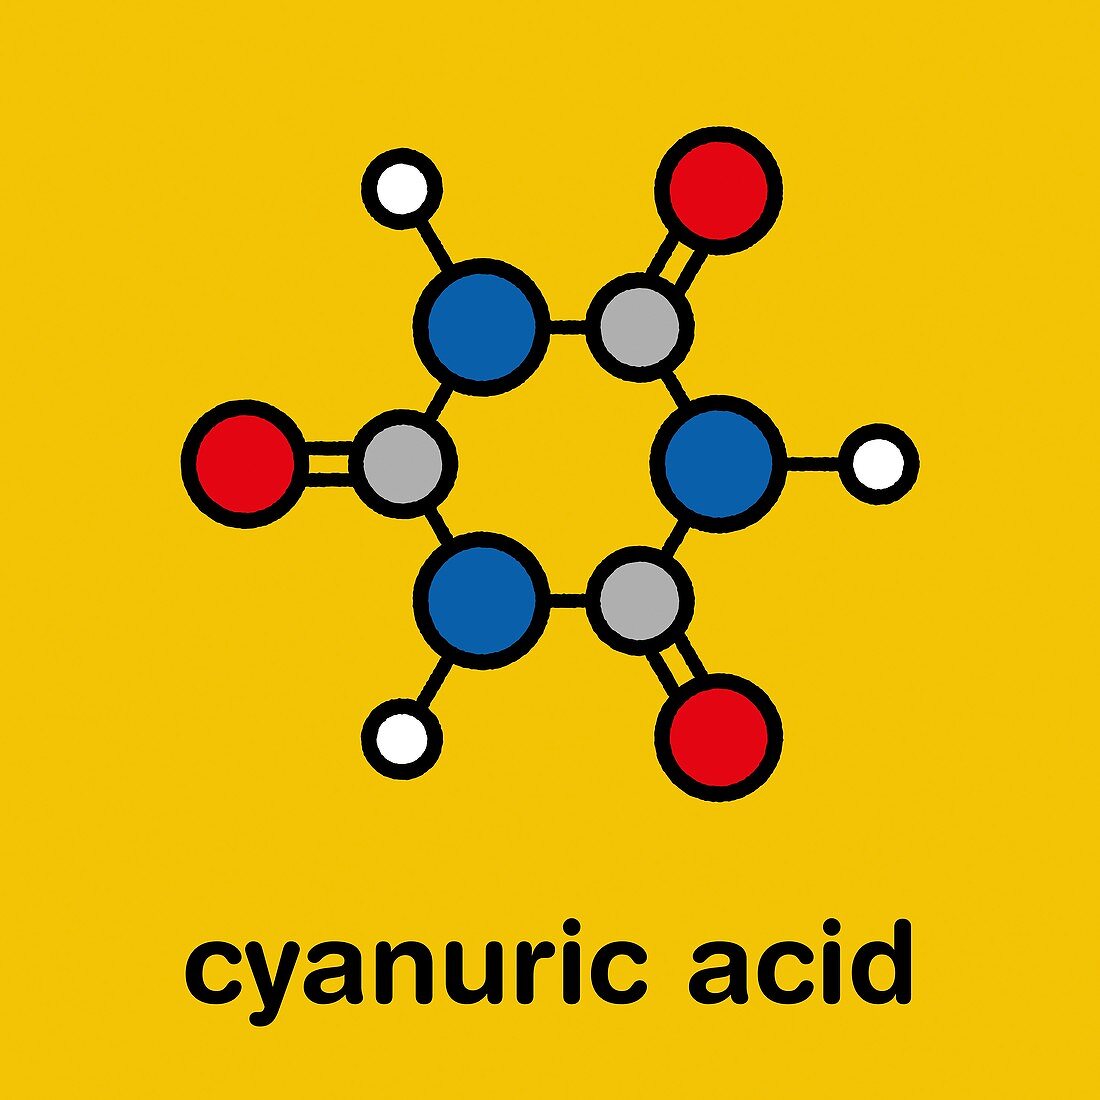 Cyanuric acid molecule, illustration